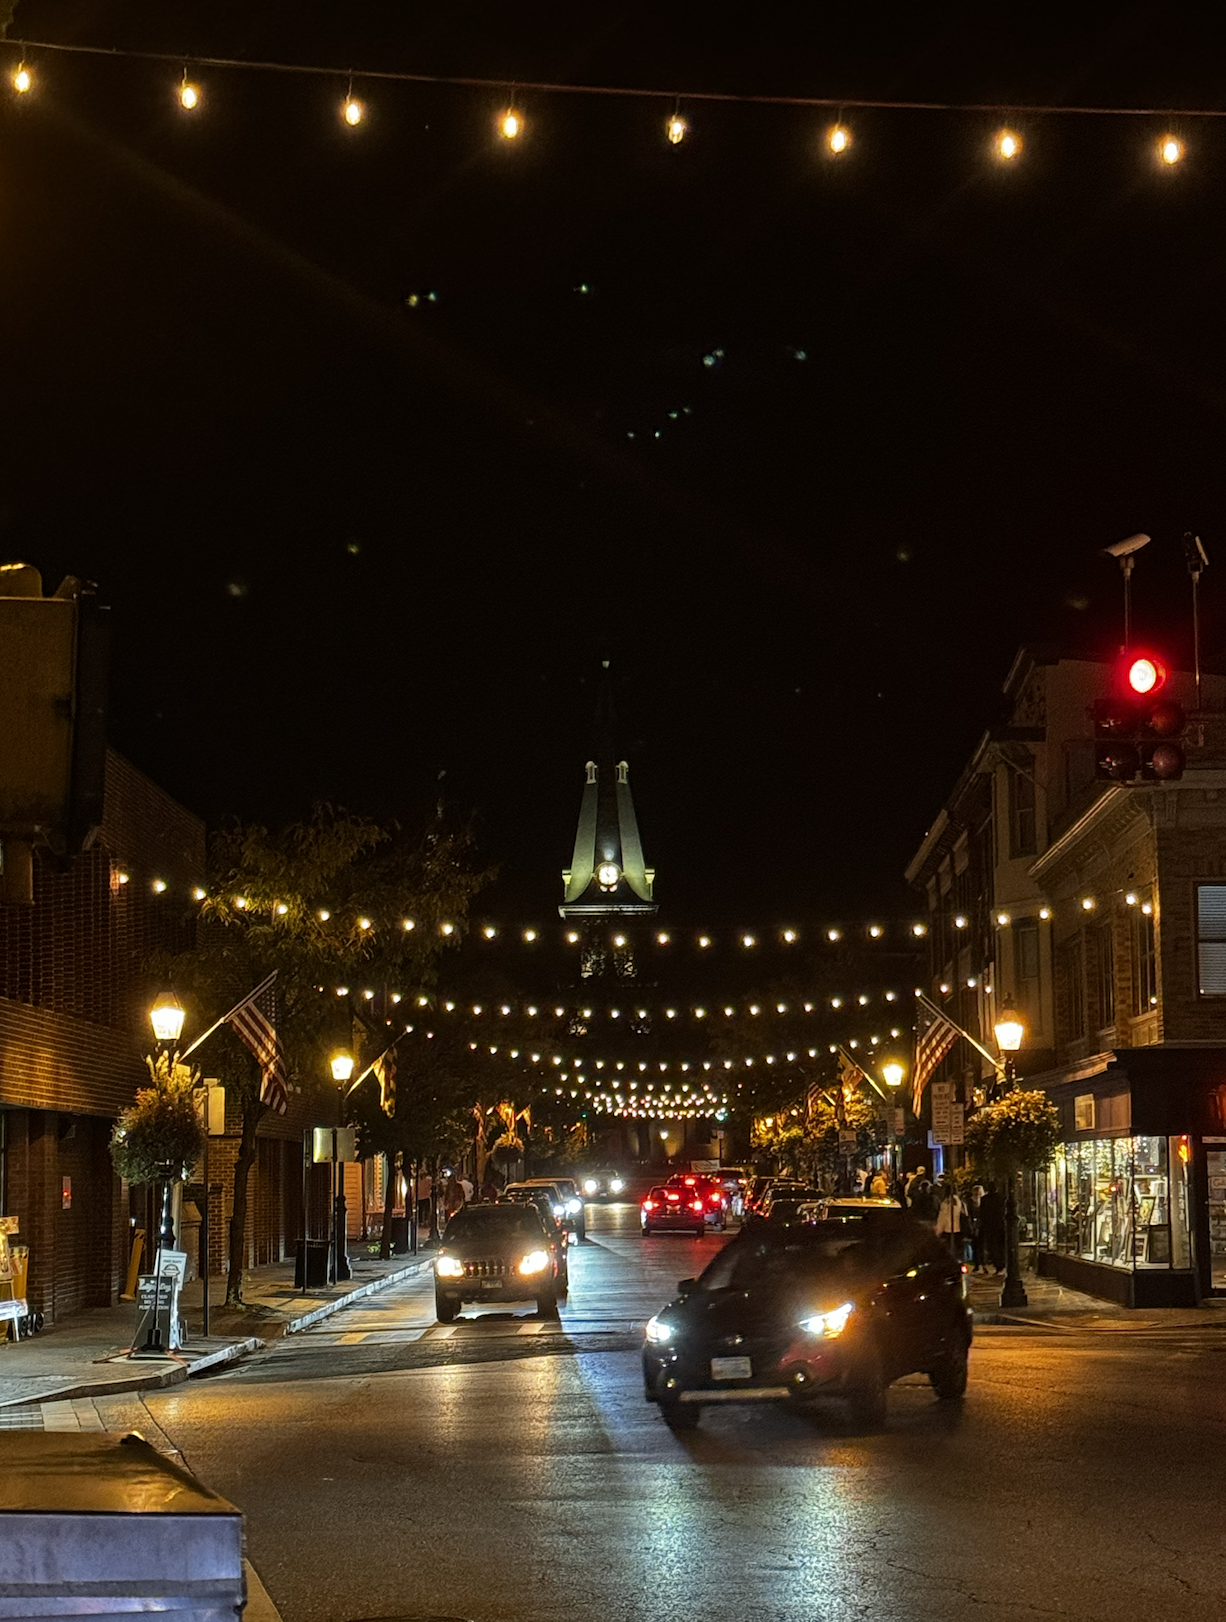 Annapolis at night